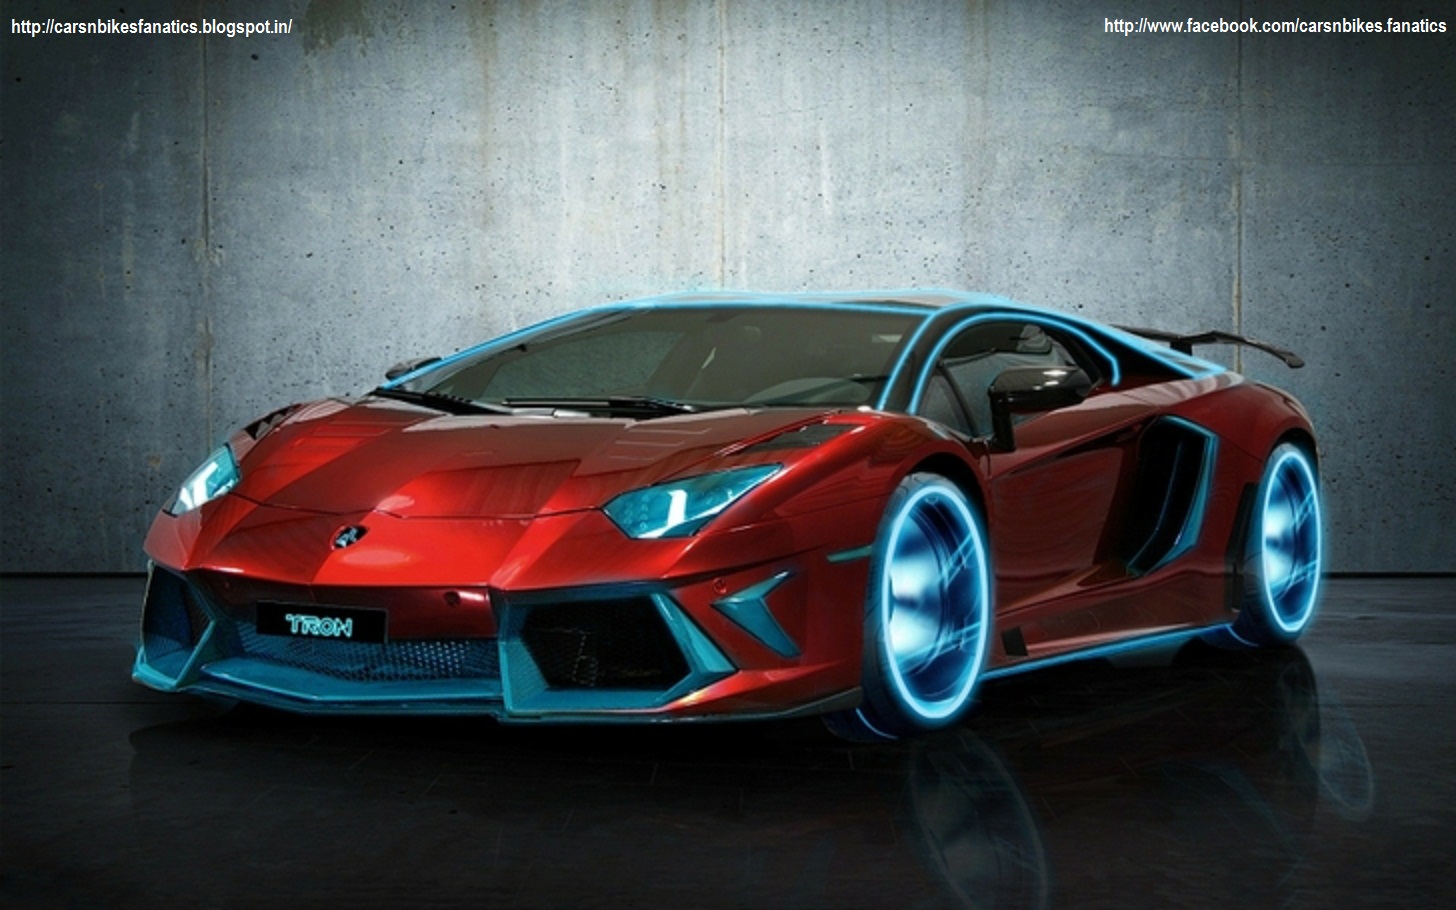 Lamborghini Aventador Tron As Our New Profile Picture On